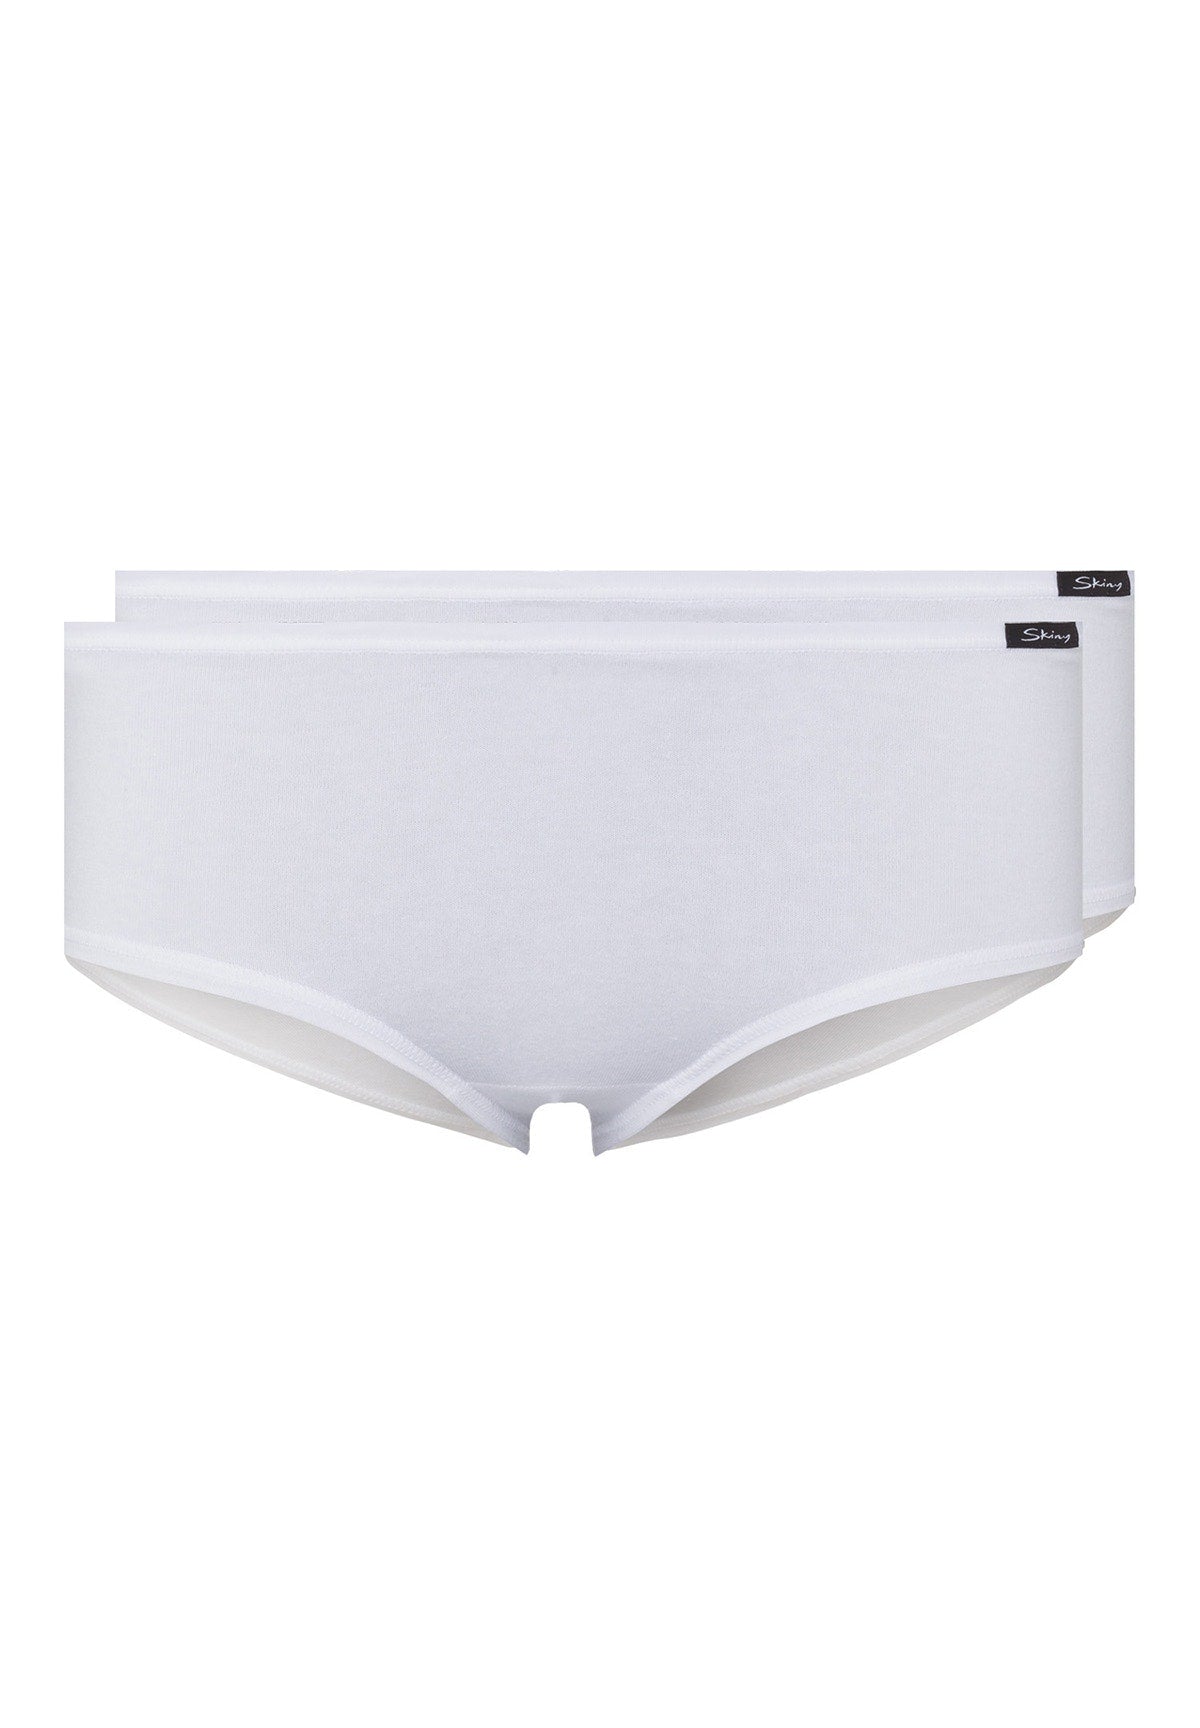 Skiny Damen Panty 2er Pack Advantage Cotton (White)